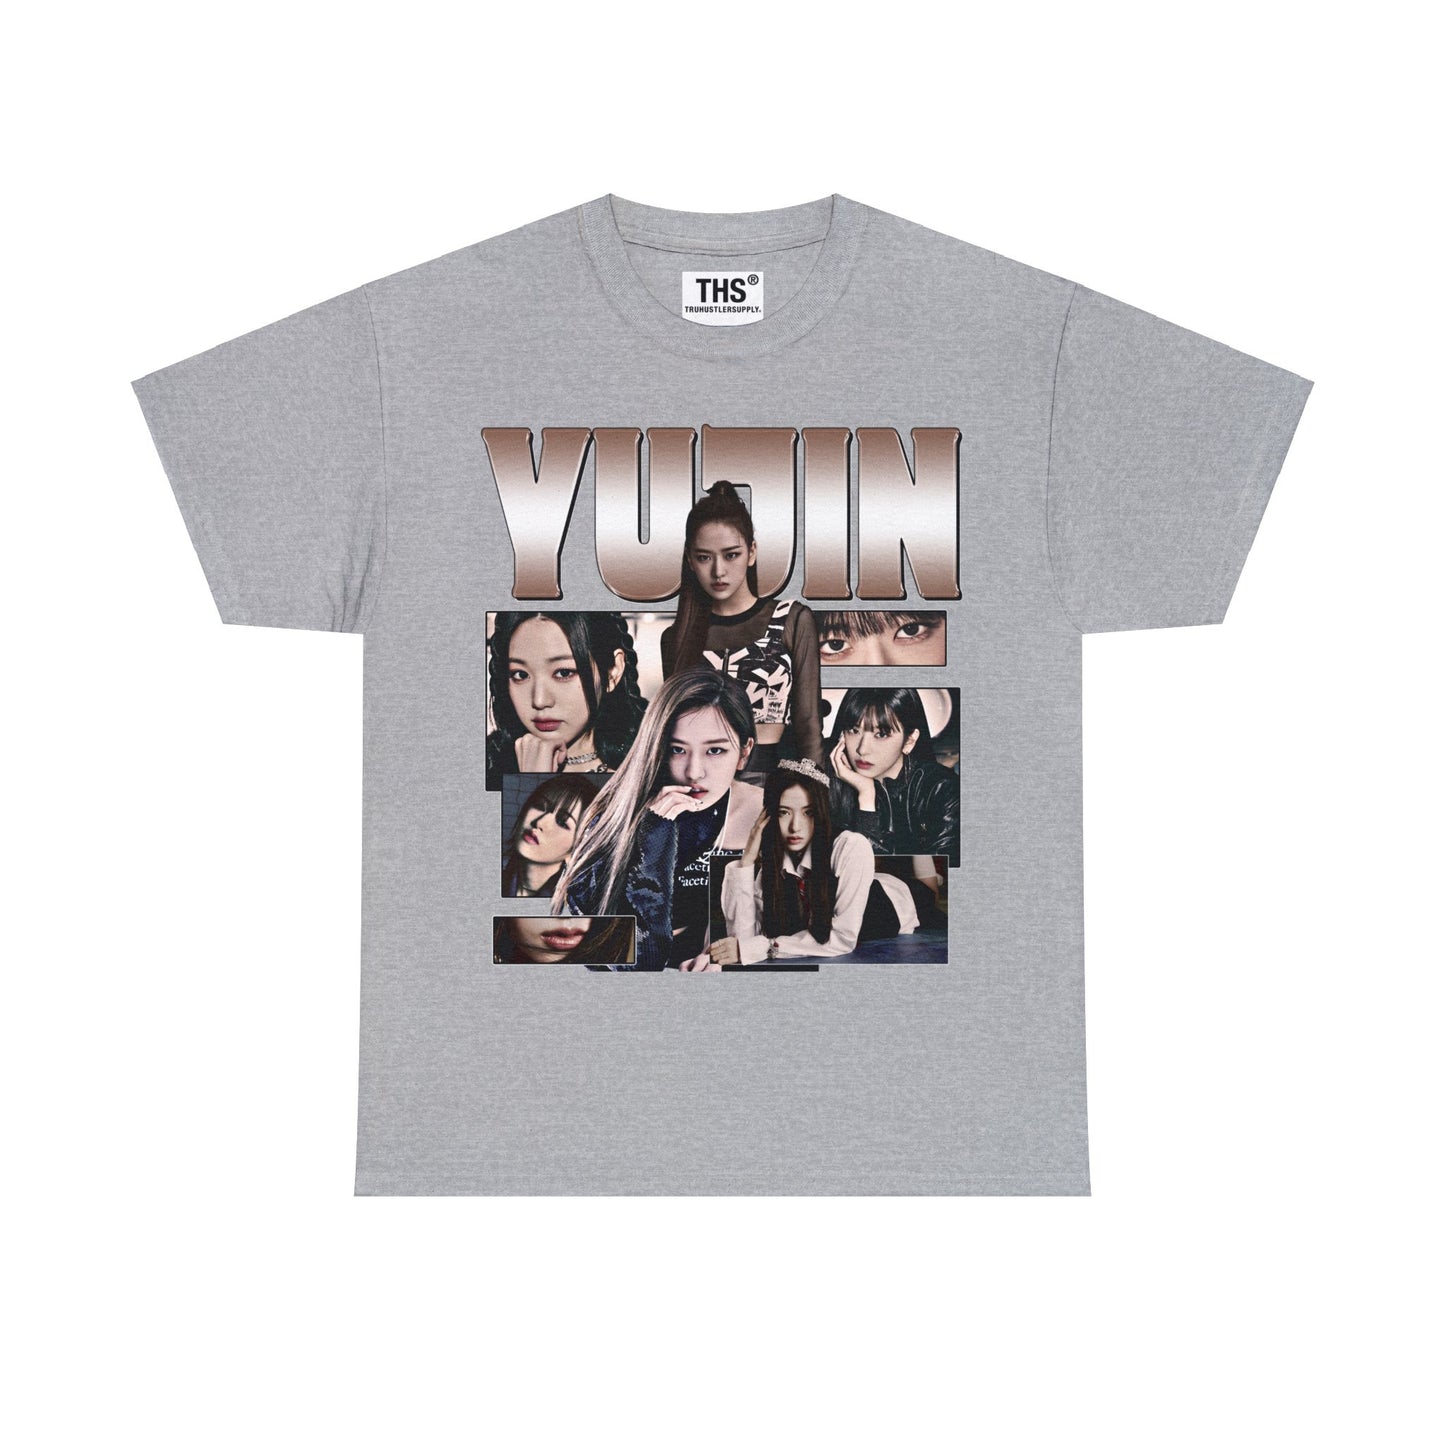 Yujin IVE Bootleg Graphic T Shirt